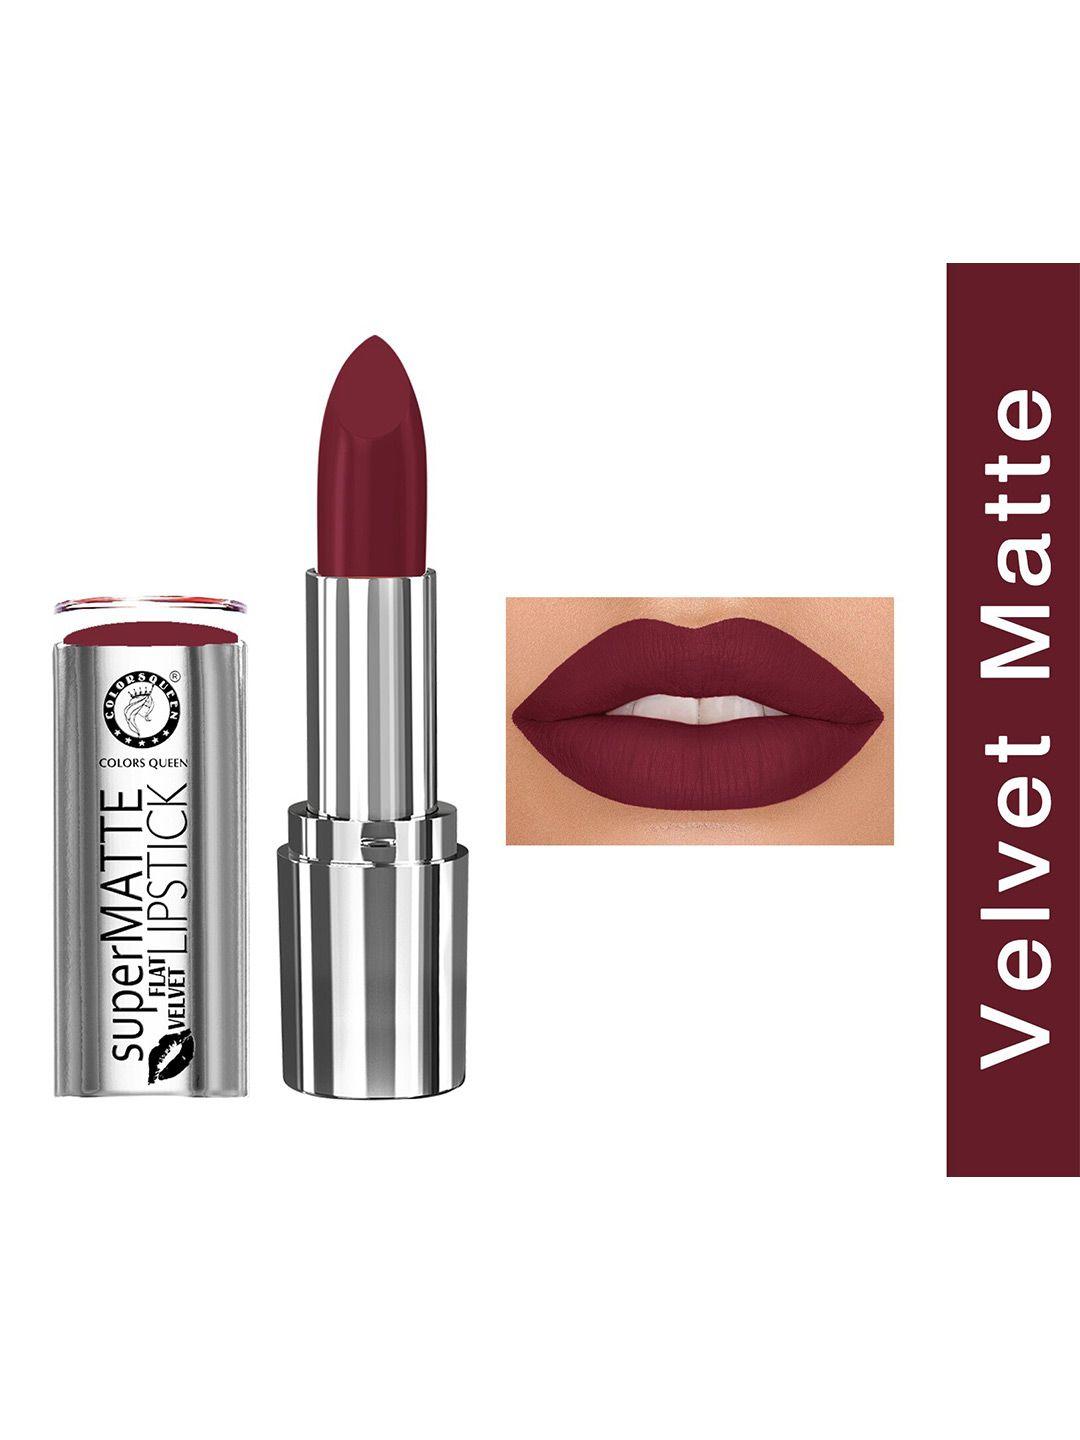 colors queen super matte flat velvet lipstick 7 g - maroon 06